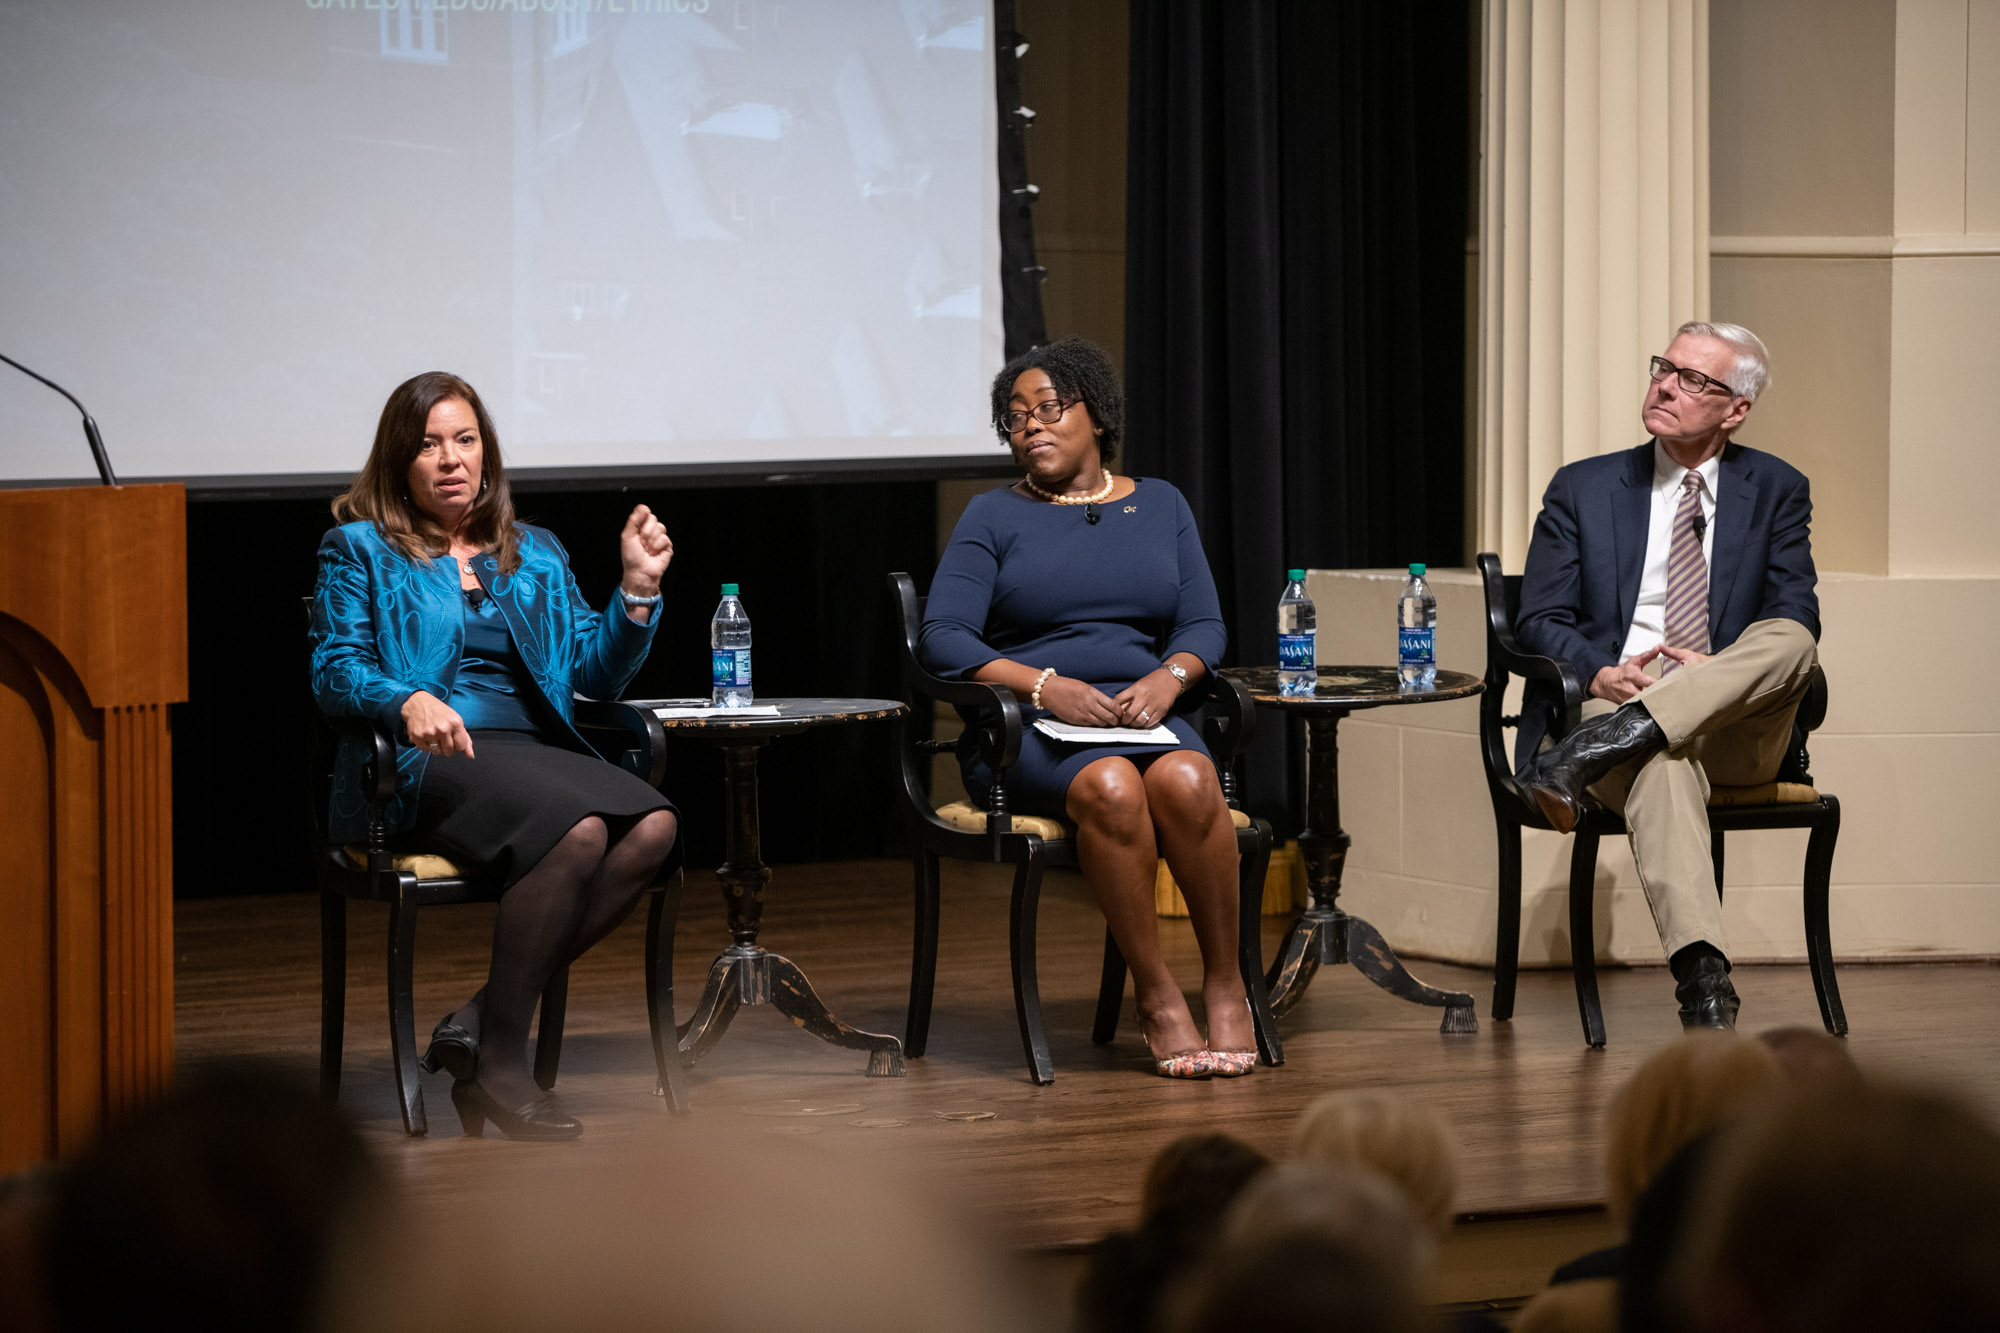 At the Academy of Medicine, panelists (L-R) Sonia Alvarez-Robinson, Aisha Oliver-Staley, and Steve Salbu discuss ethical leadership.